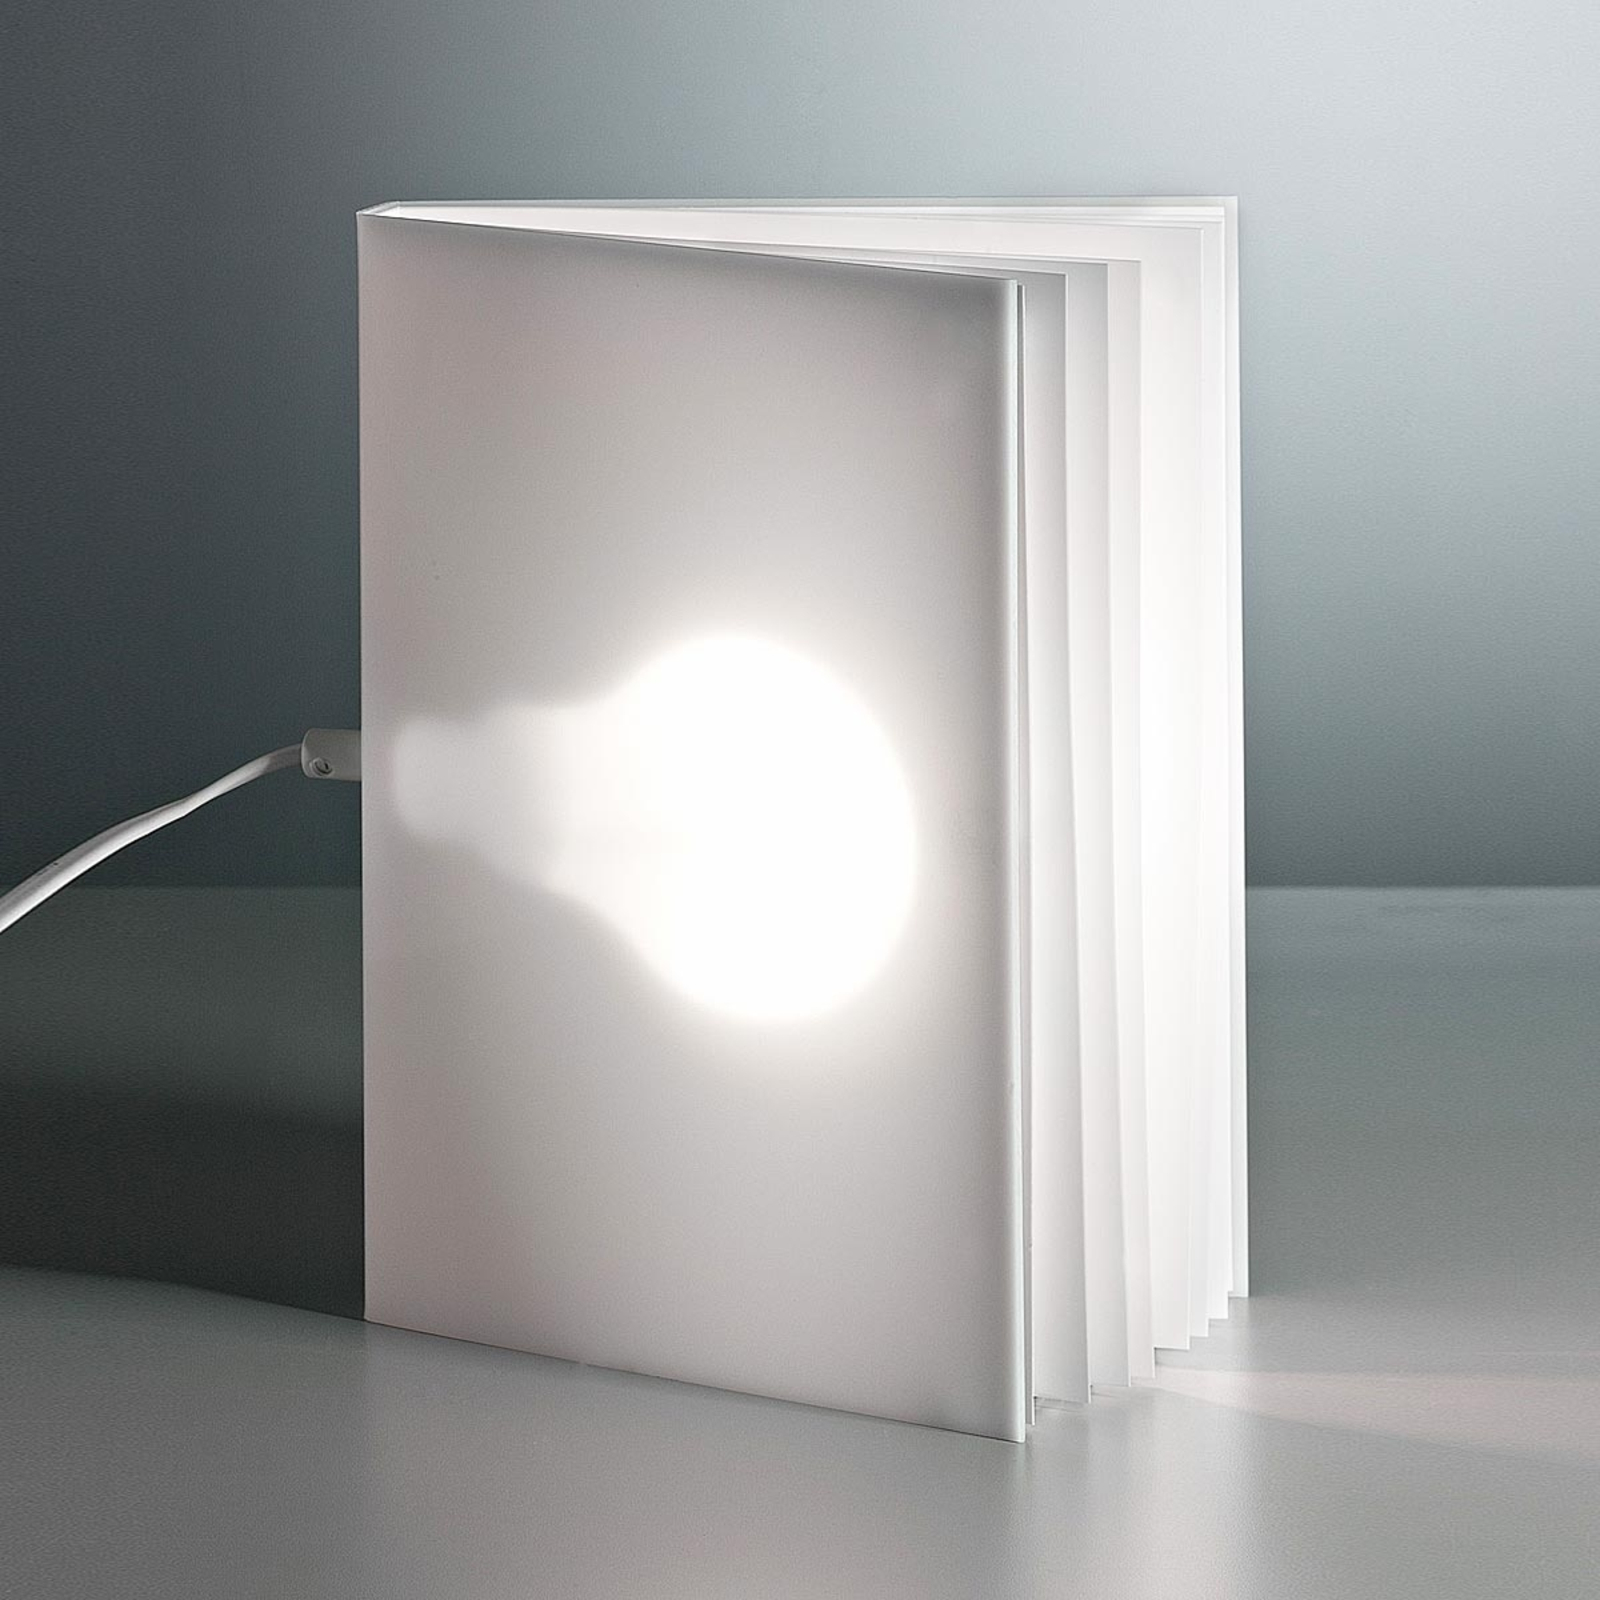 TECNOLUMEN BookLight tafellamp van Vincenz Warnke